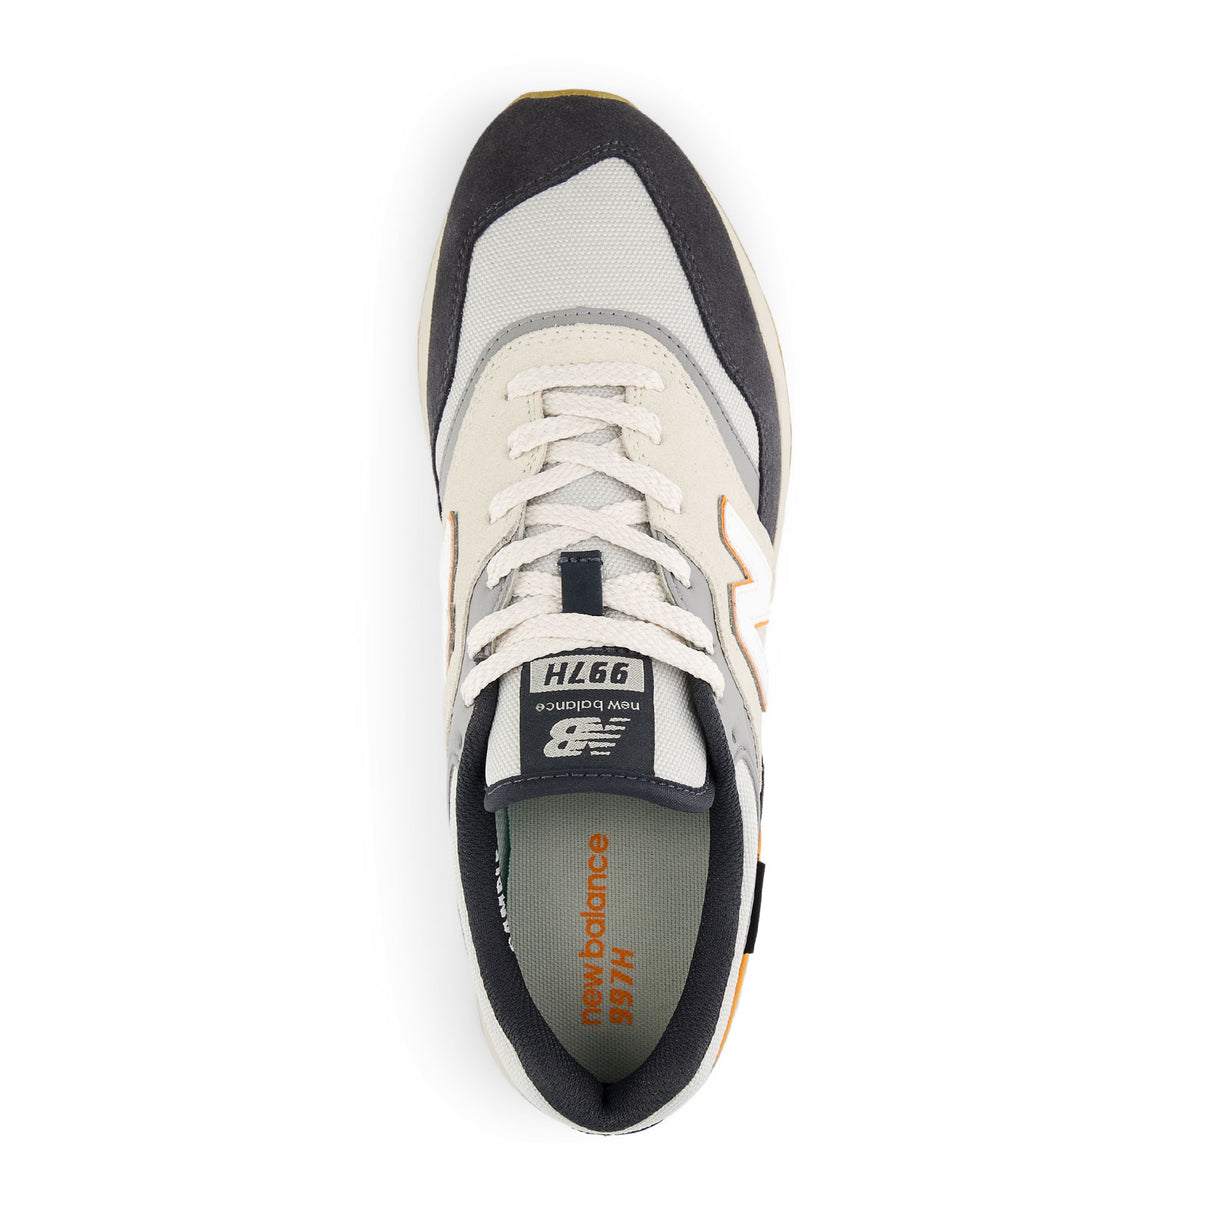 New Balance 997H Sneaker (Men) - Moonbeam/Phantom/Brighton Grey/Sun Glow Athletic - Casual - Lace Up - The Heel Shoe Fitters